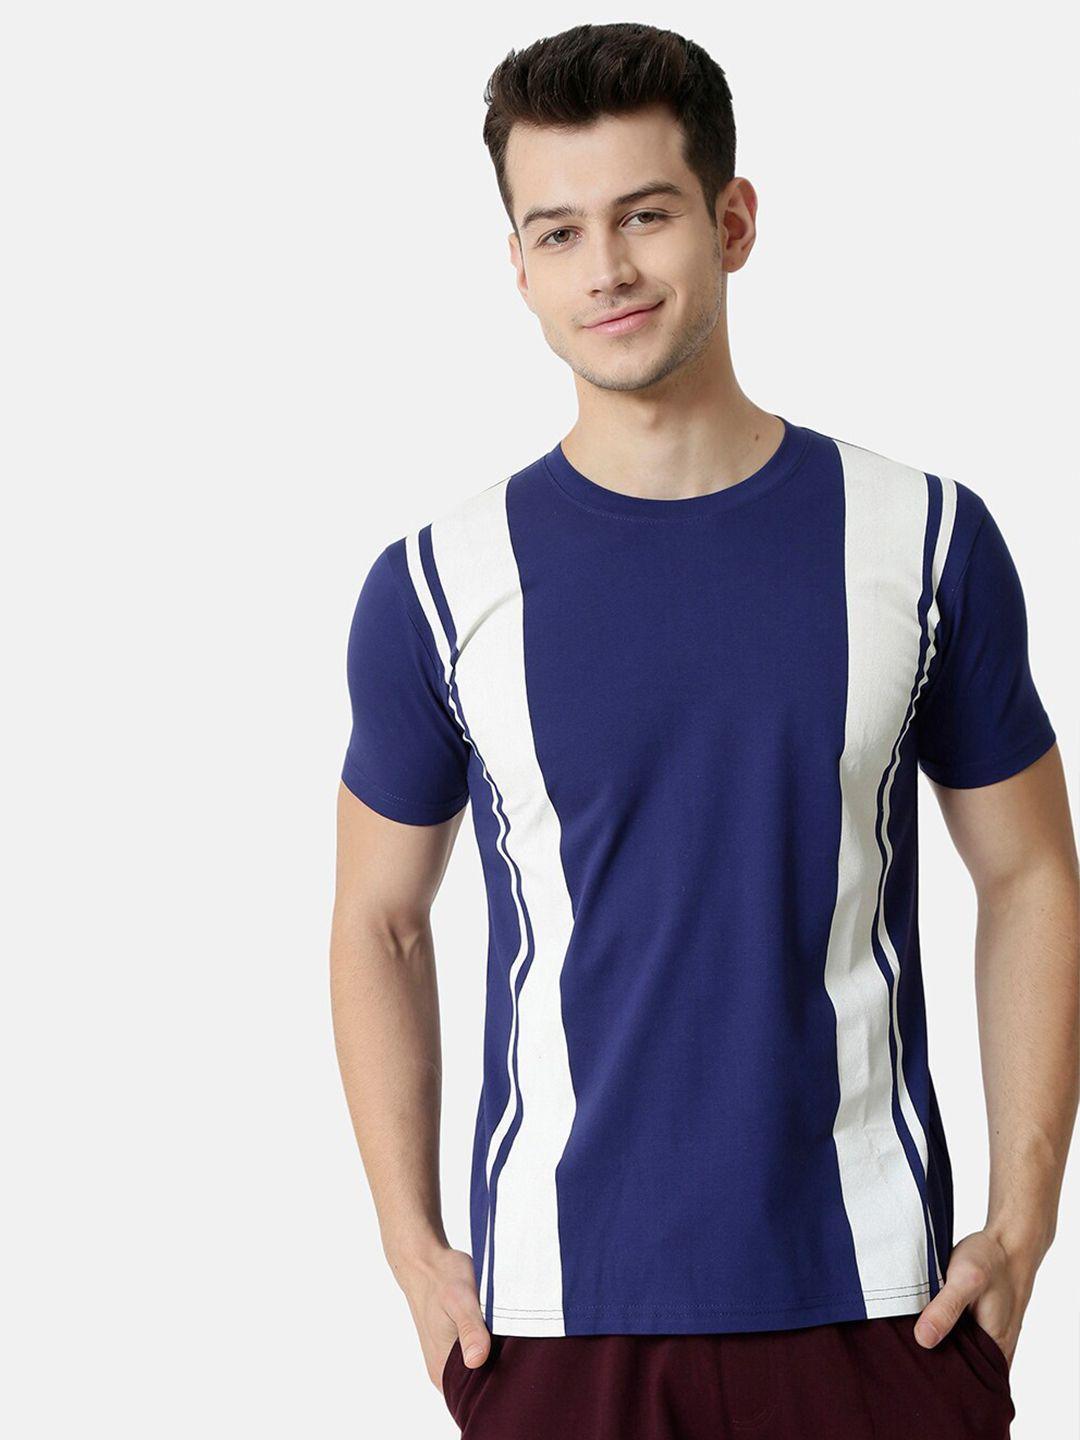 campus-sutra-men-navy-blue-&-indigo-colourblocked-v-neck-raw-edge-t-shirt